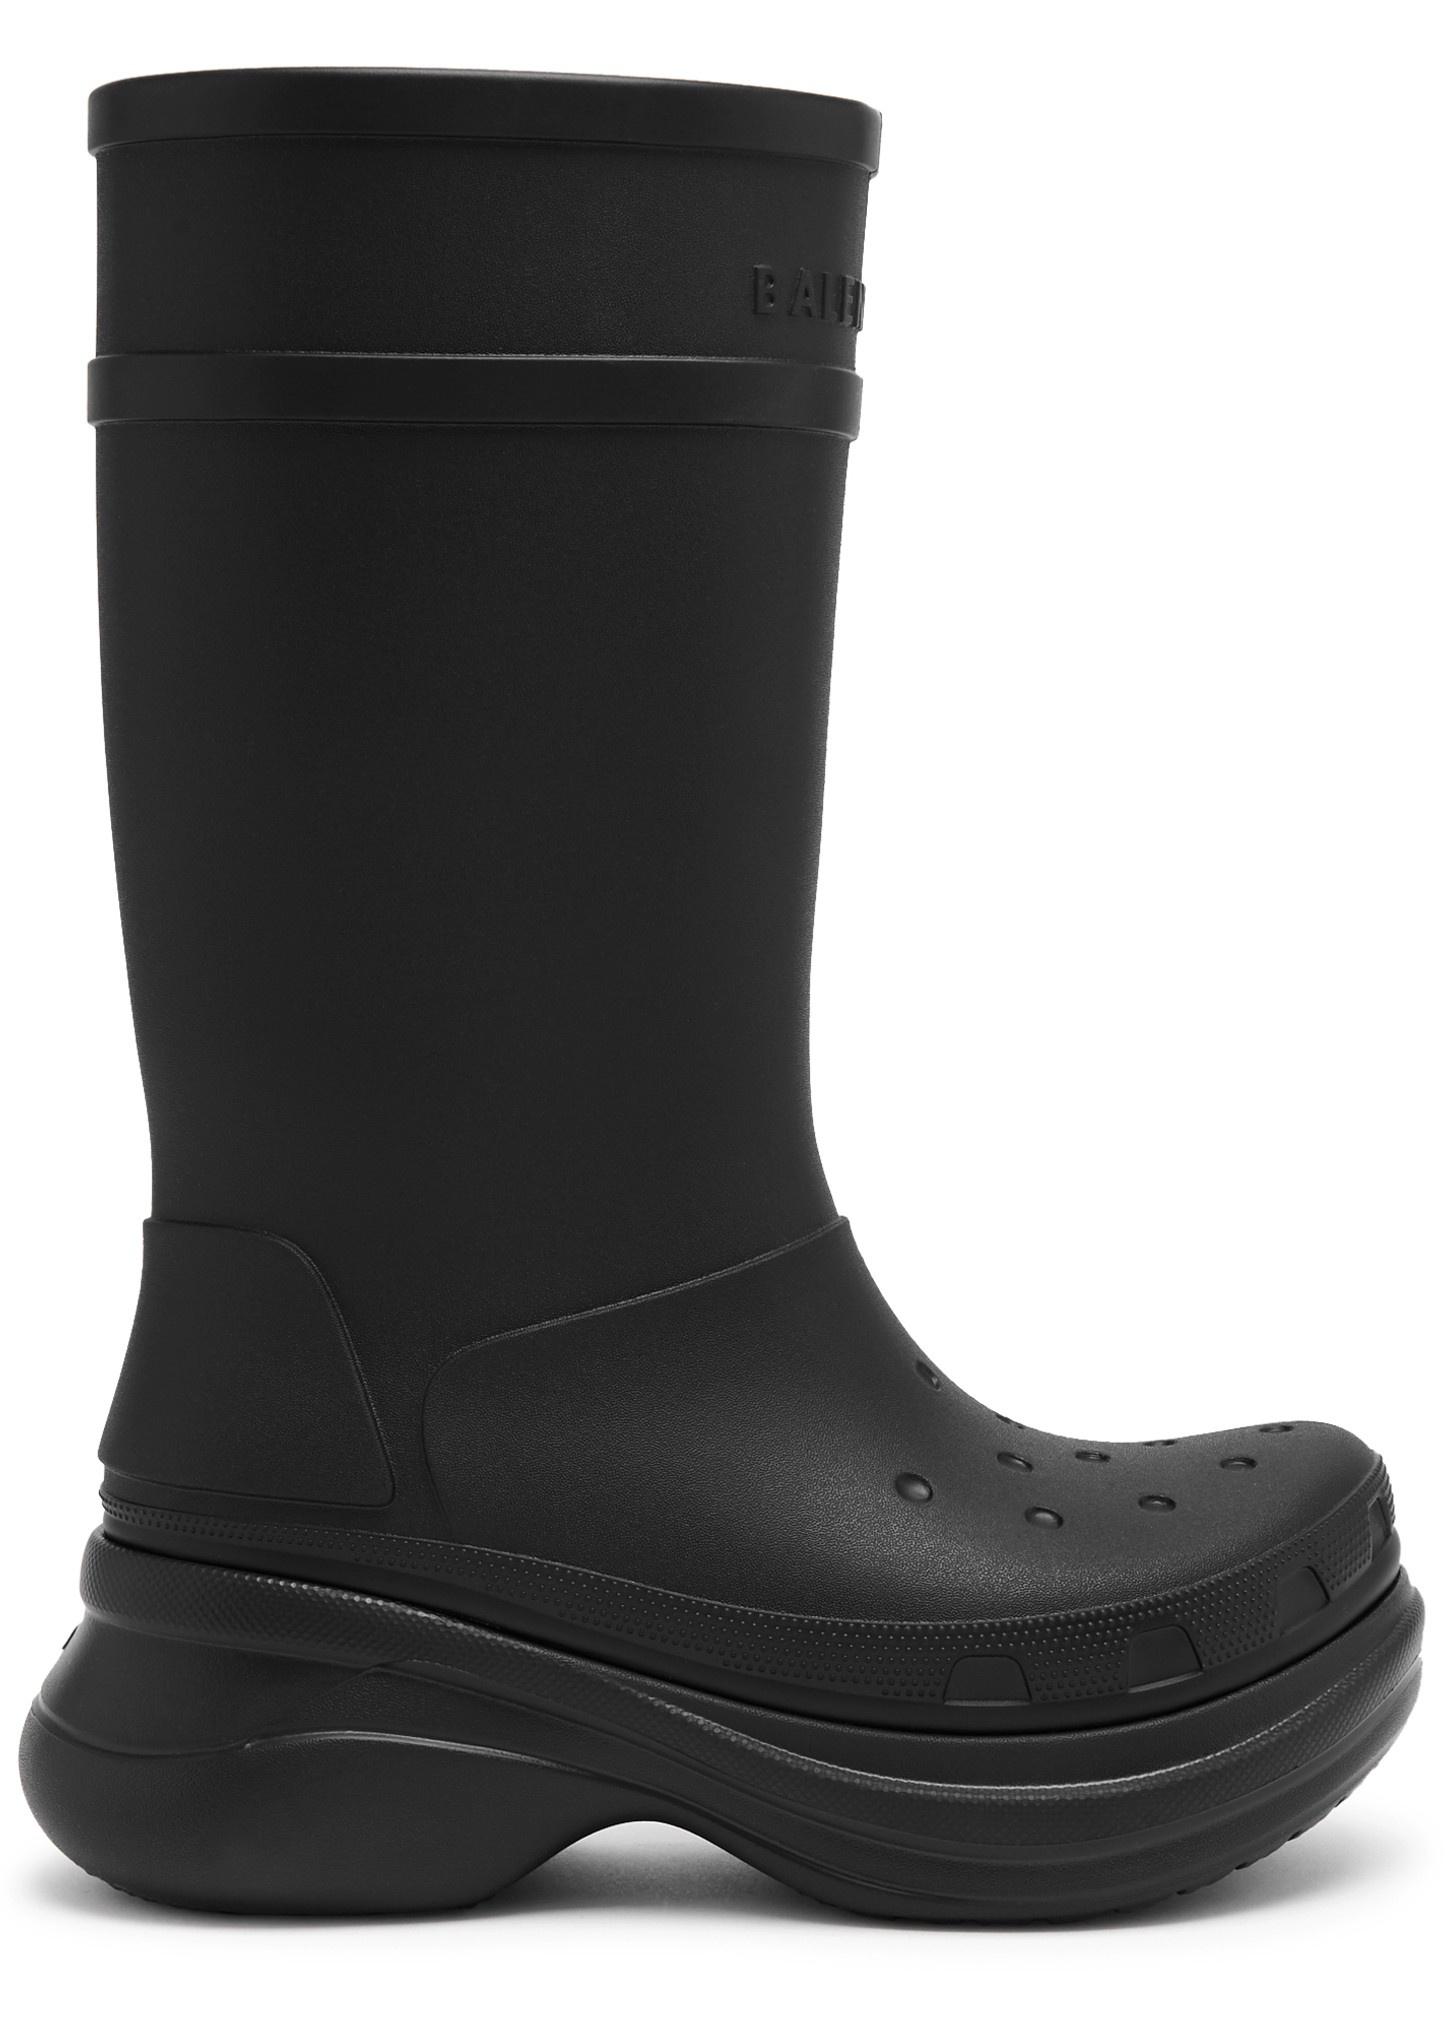 X Crocs rubber boots - 1